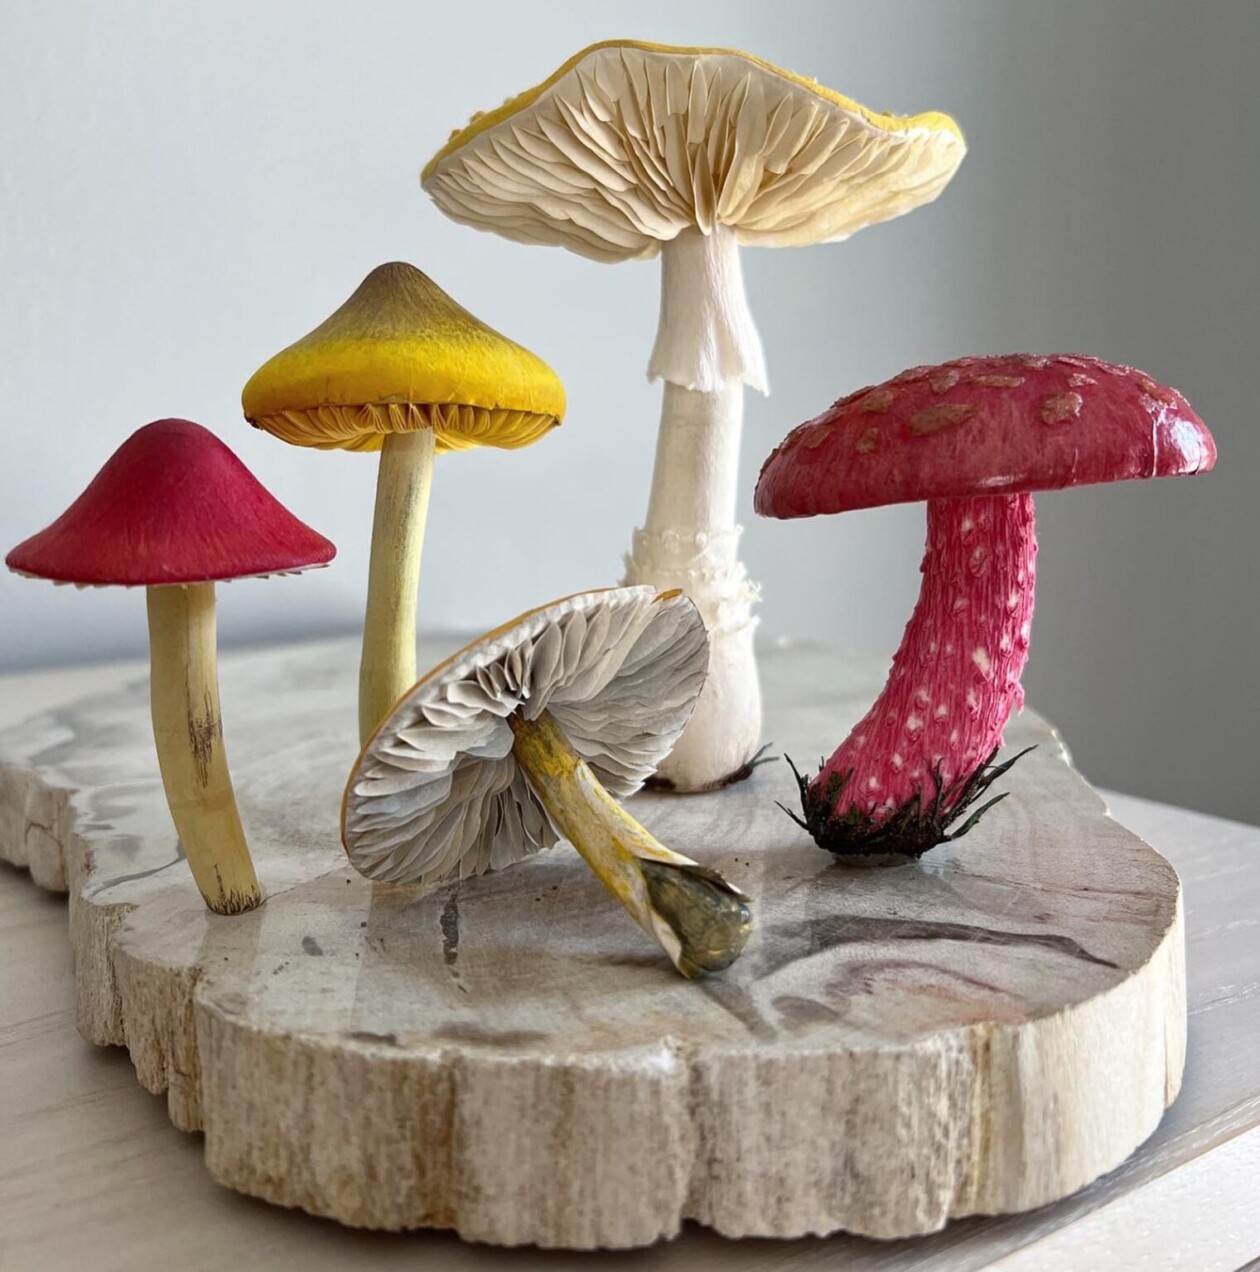 Splendid Lifelike Paper Sculptures Of Animals, Plants, Vegetables, And Mushrooms By ann Wood (1)